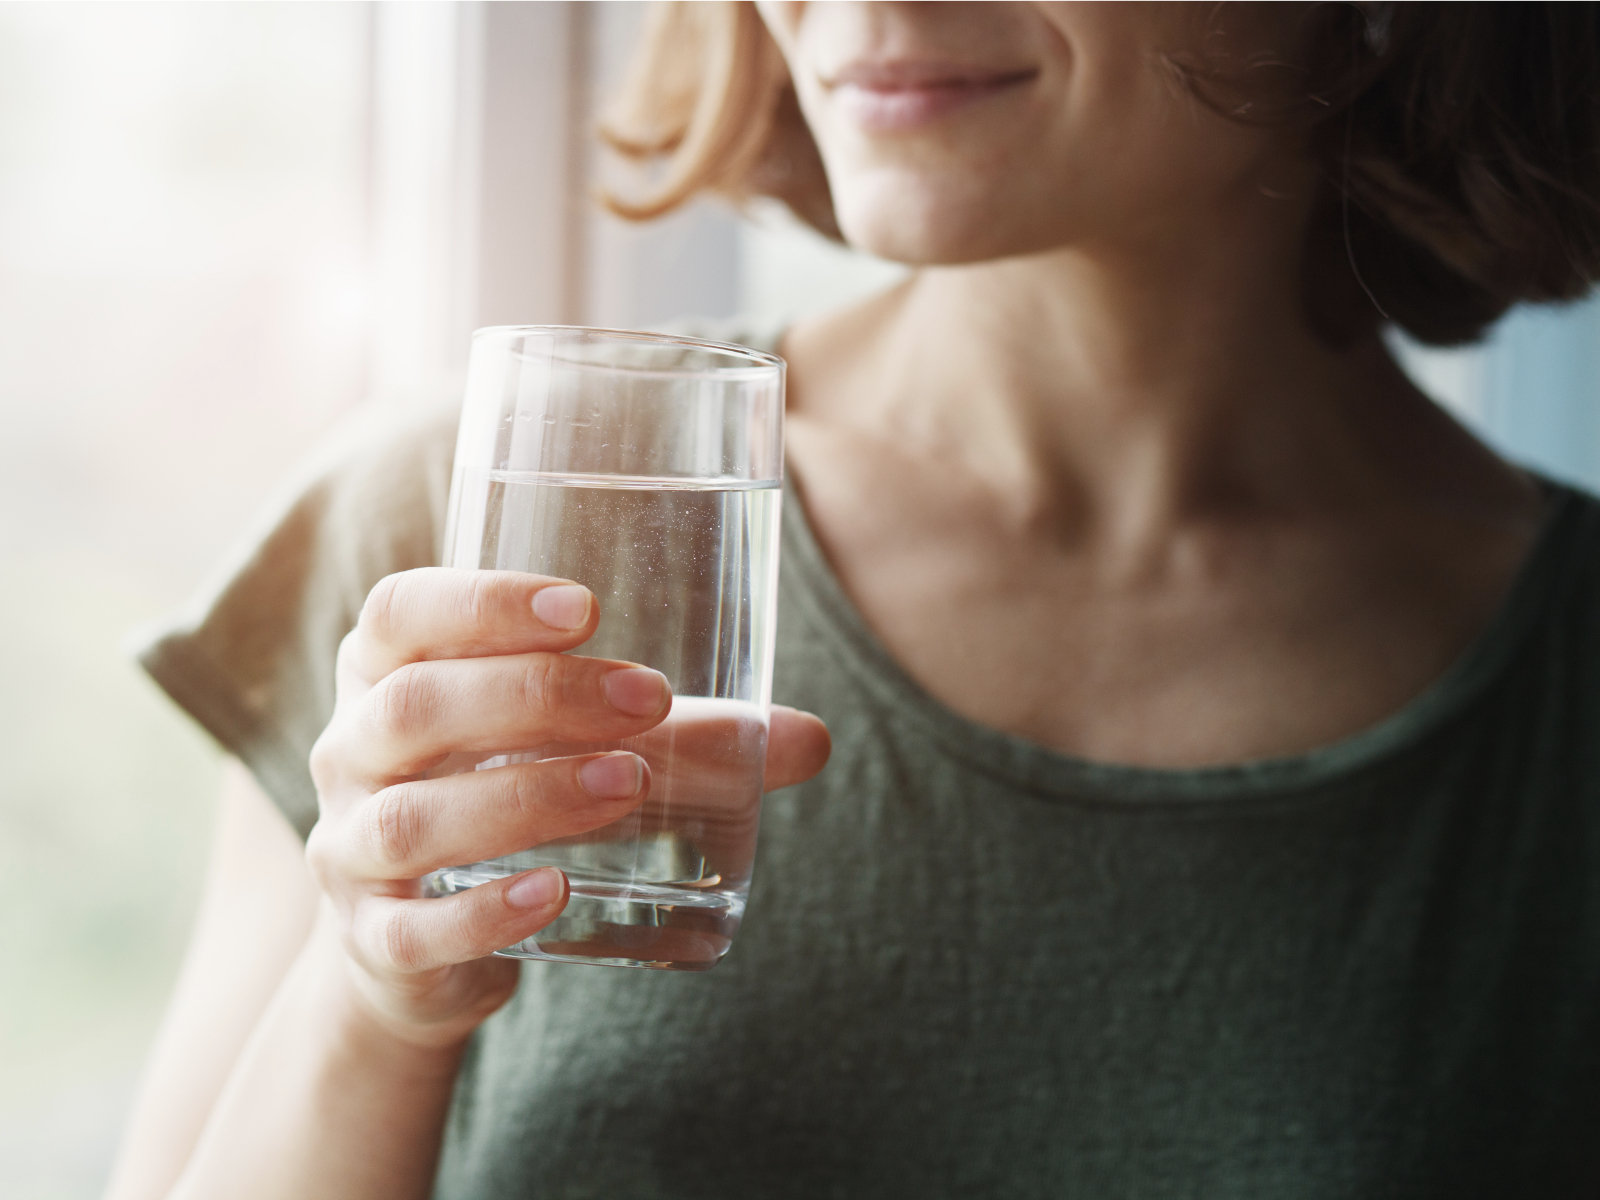 woman drinking water glass